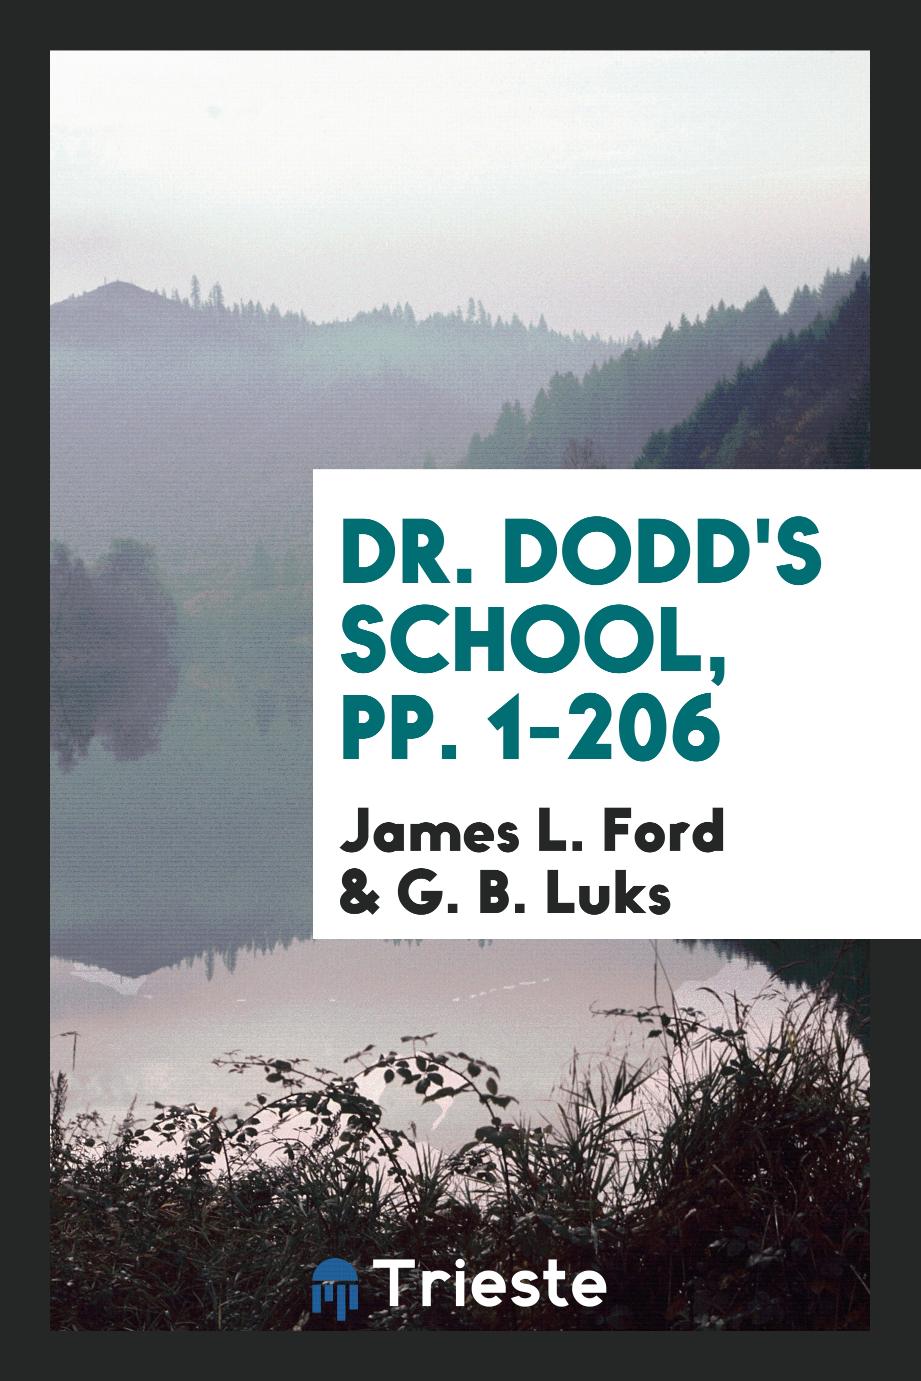 Dr. Dodd's School, pp. 1-206